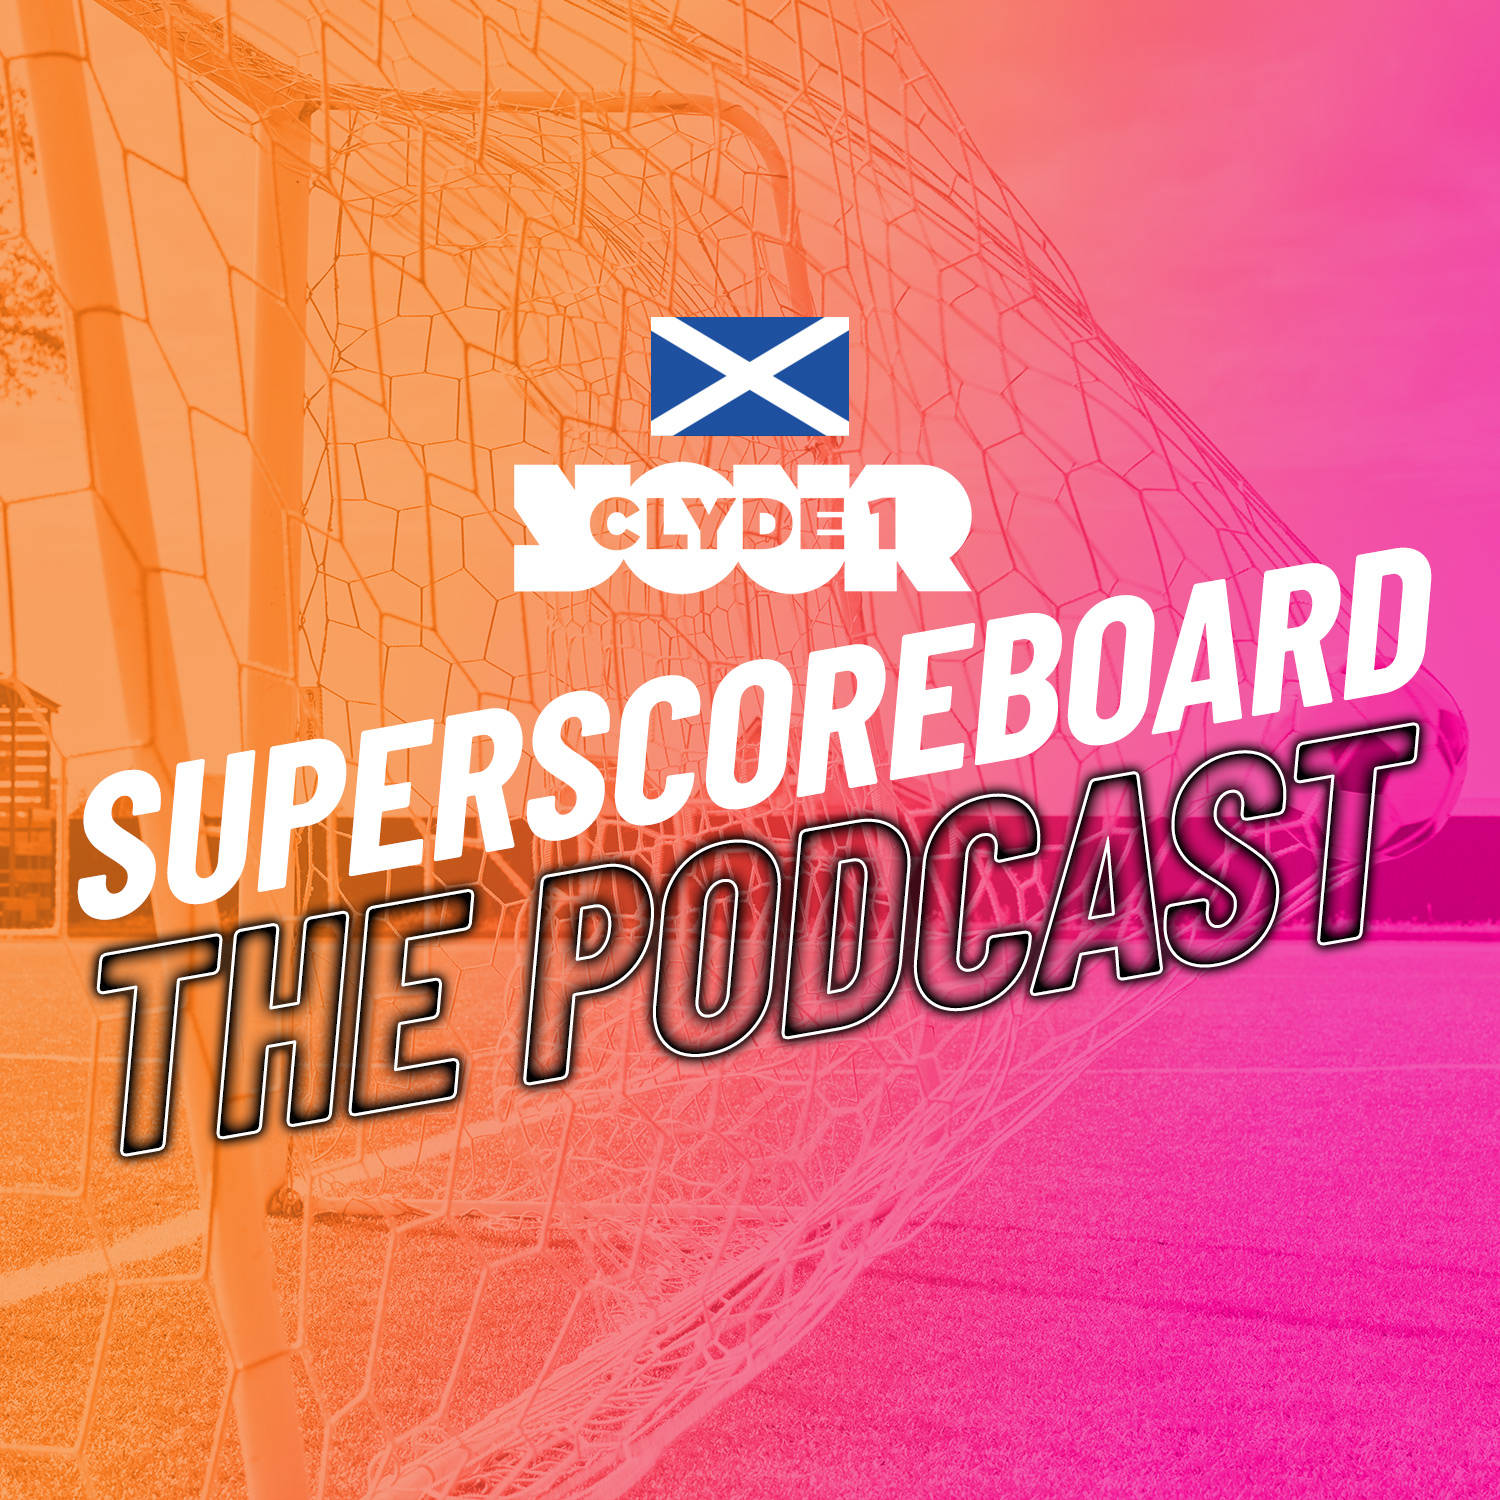 Sunday 21st April Clyde 1 Superscoreboard – Part 2